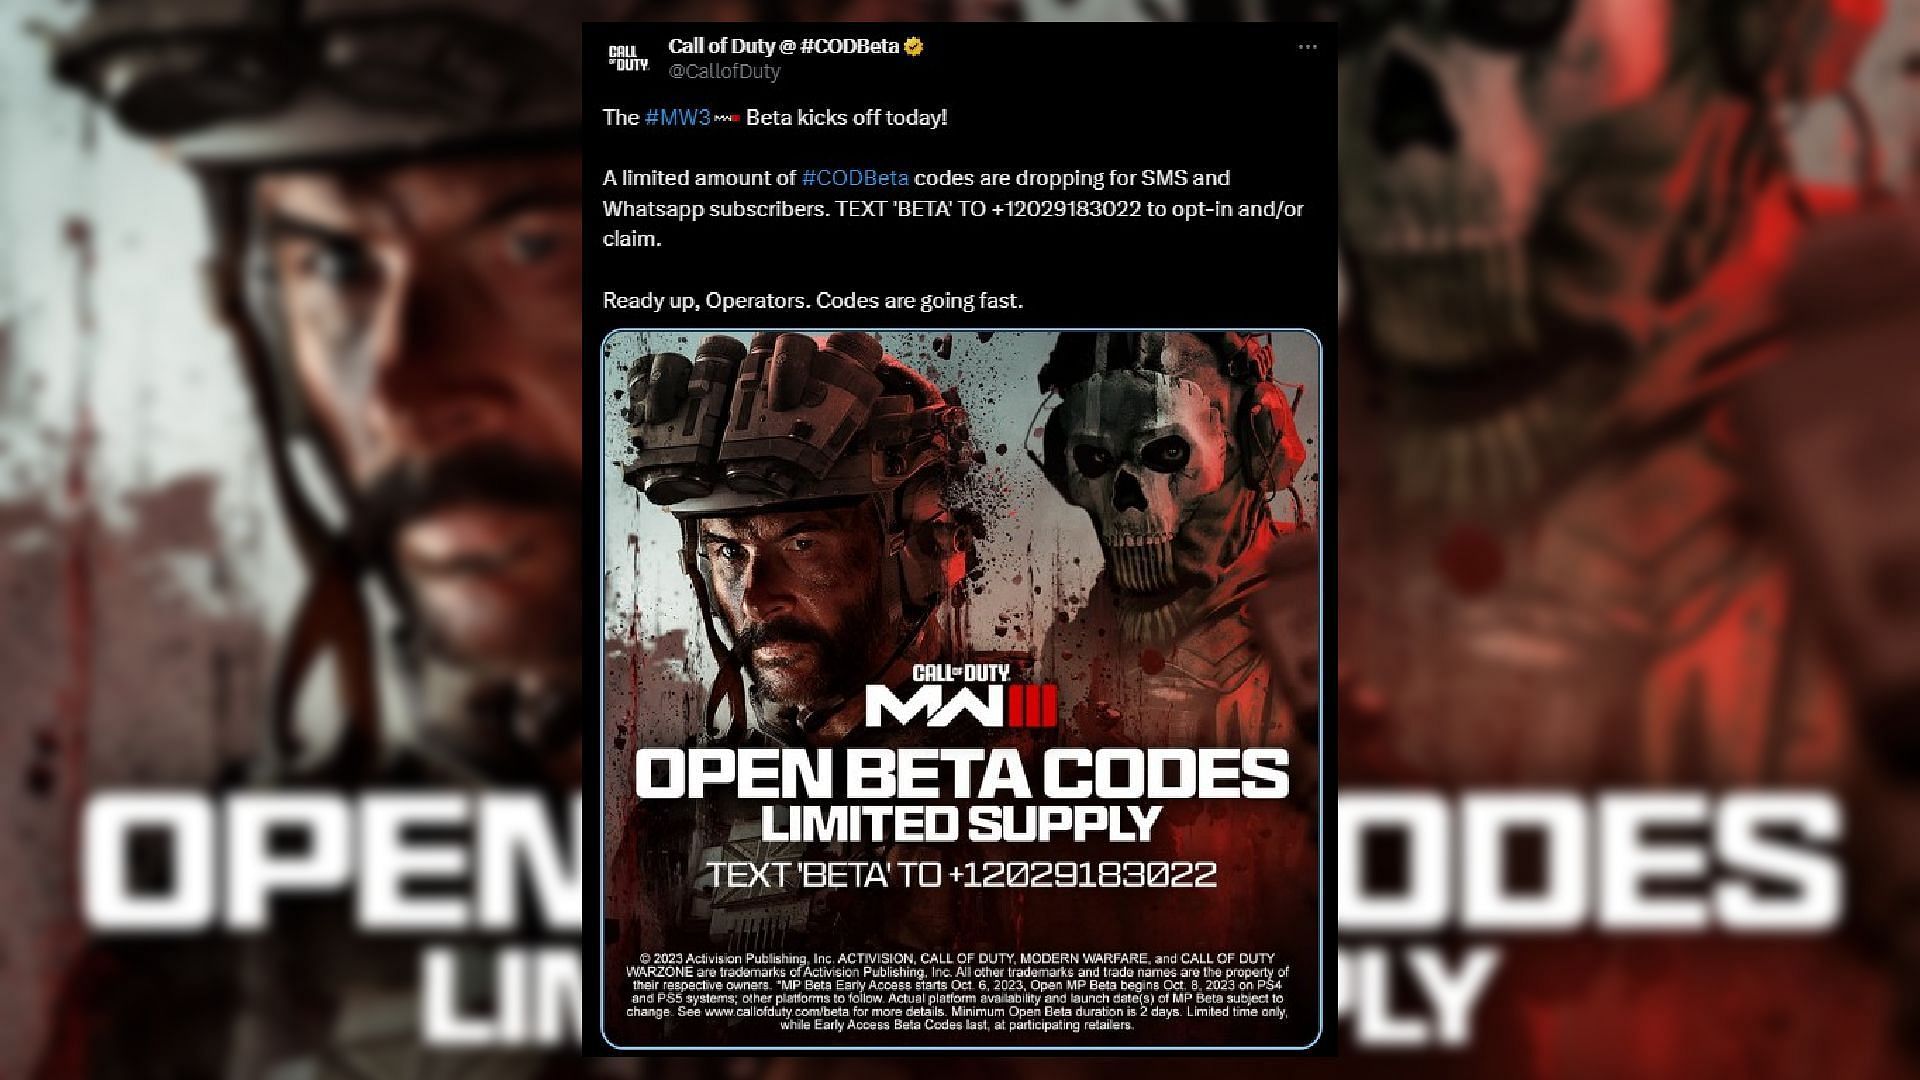 Modern Warfare 3 Beta Code Giveaway - All Platforms, Any Region